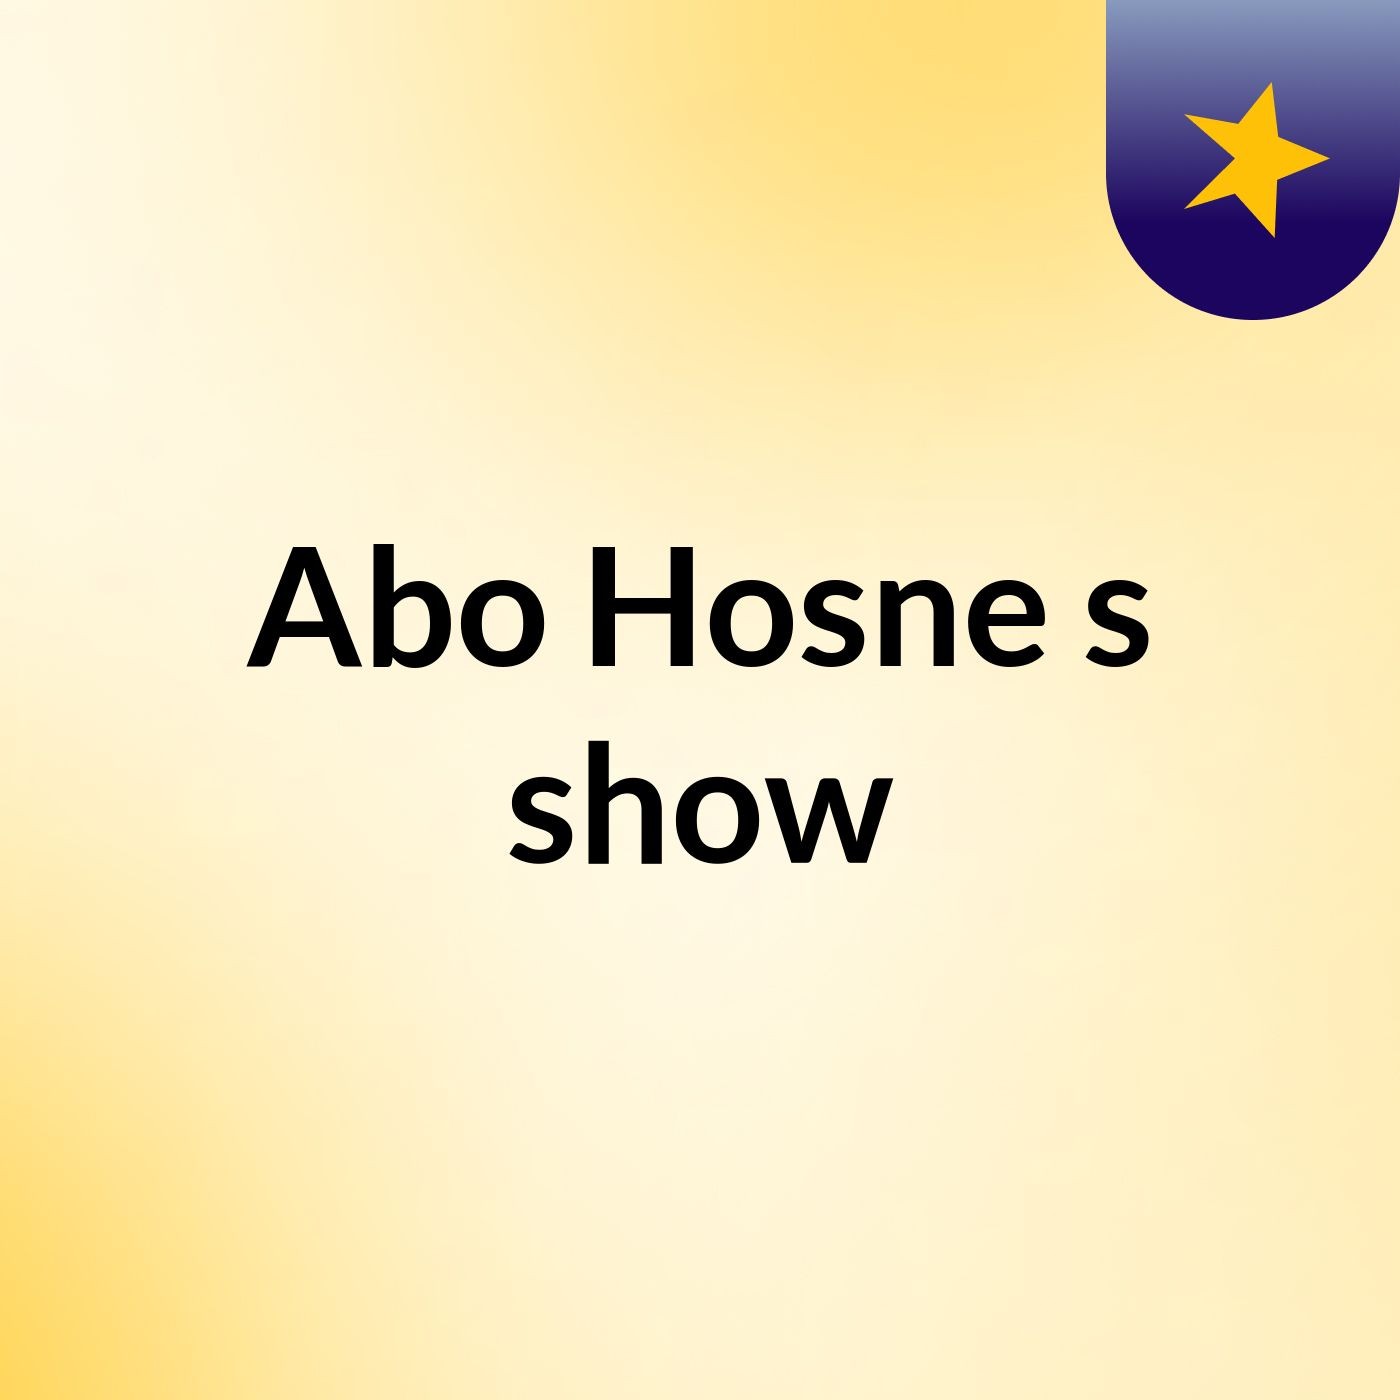 Abo Hosne's show